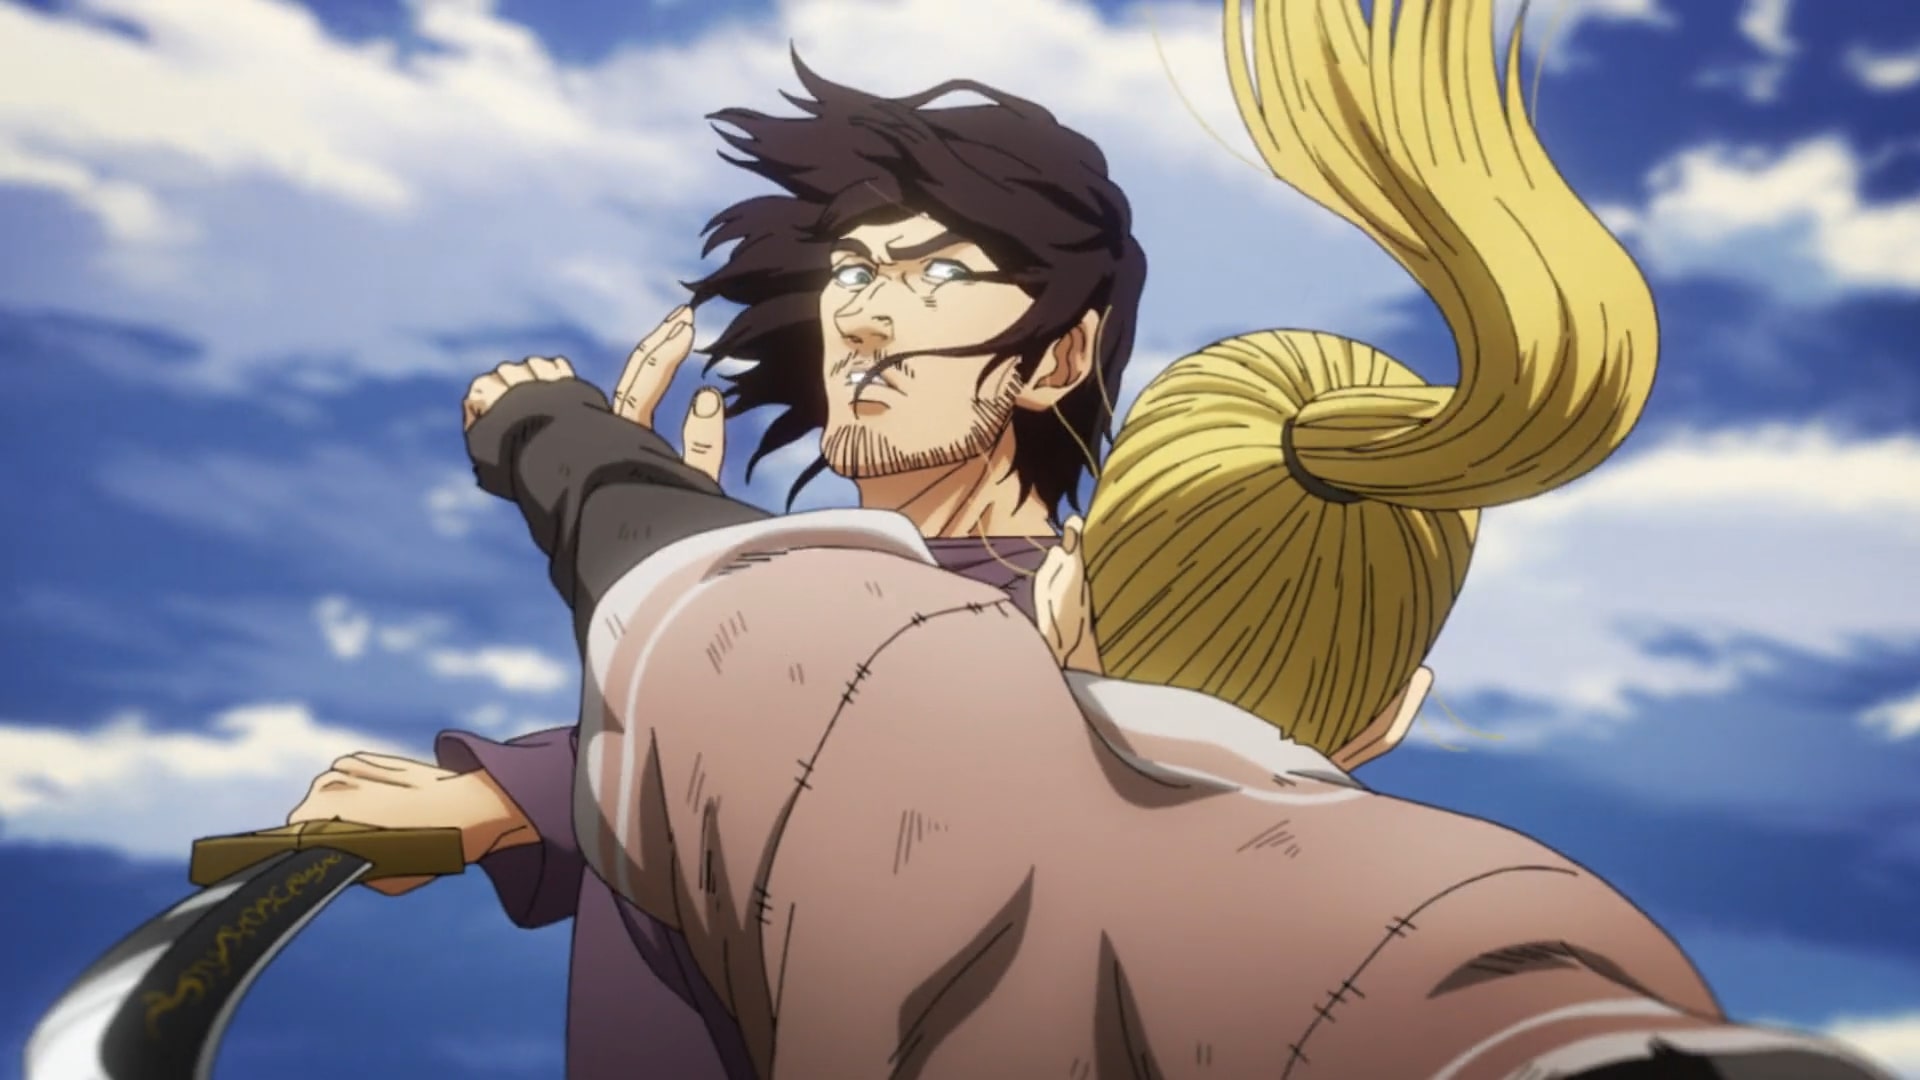 Vinland Saga Season 2 Gets Episode 16 Preview - Anime Corner